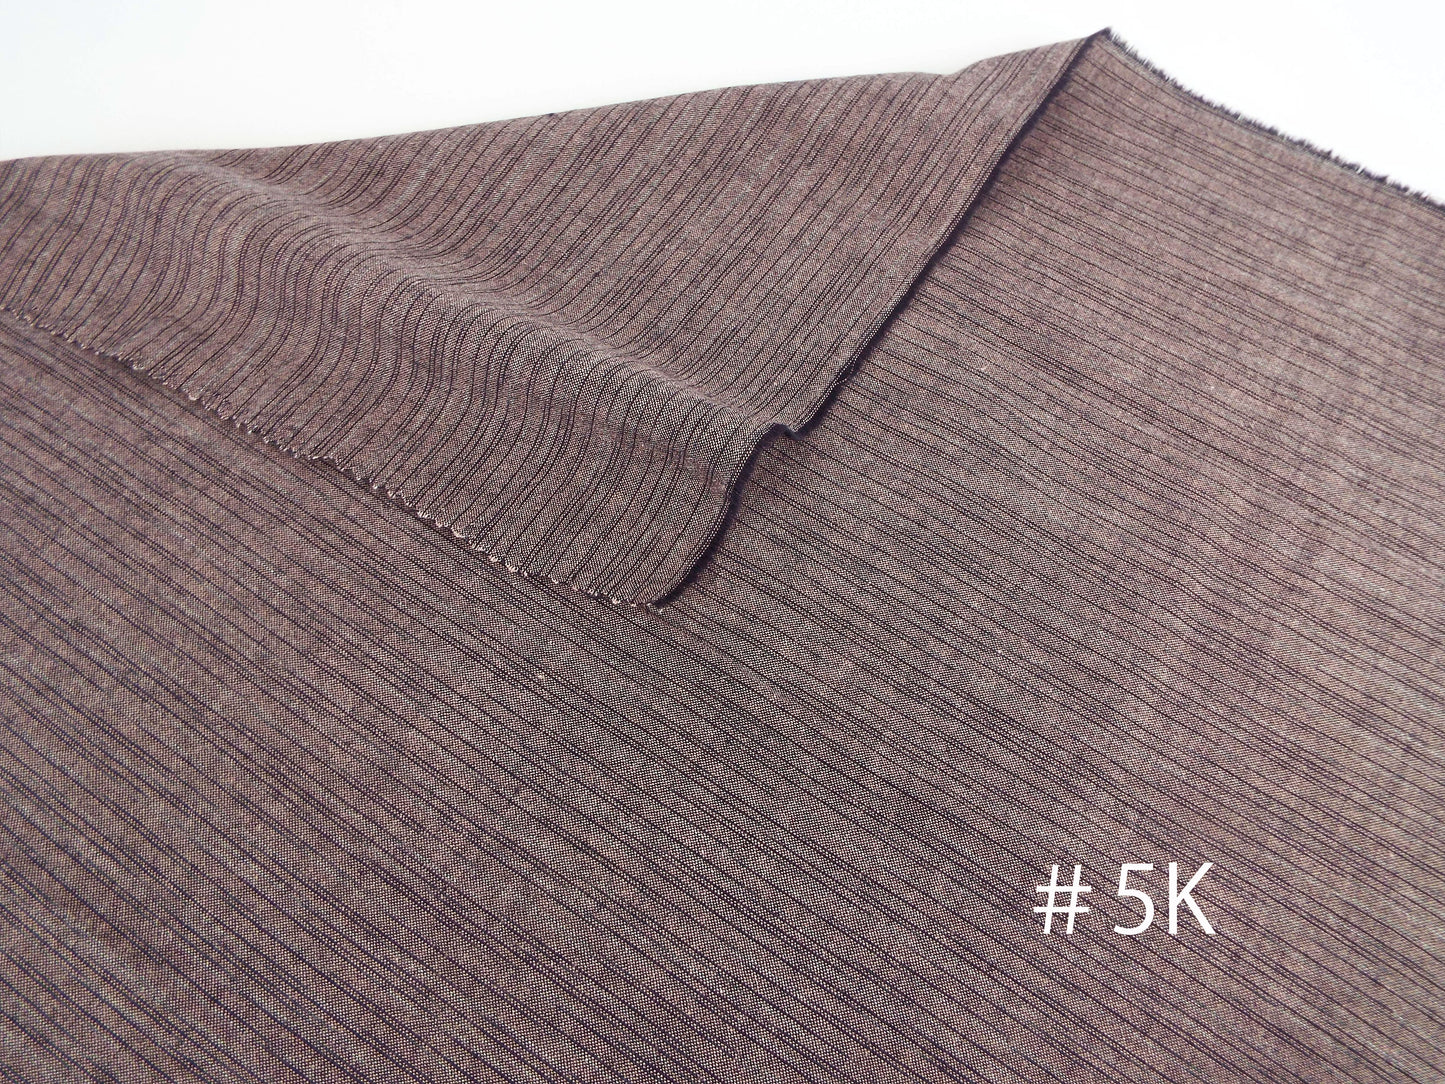 Kameda striped cotton fabric ordinary ground # 5 AEIK 4 patterns